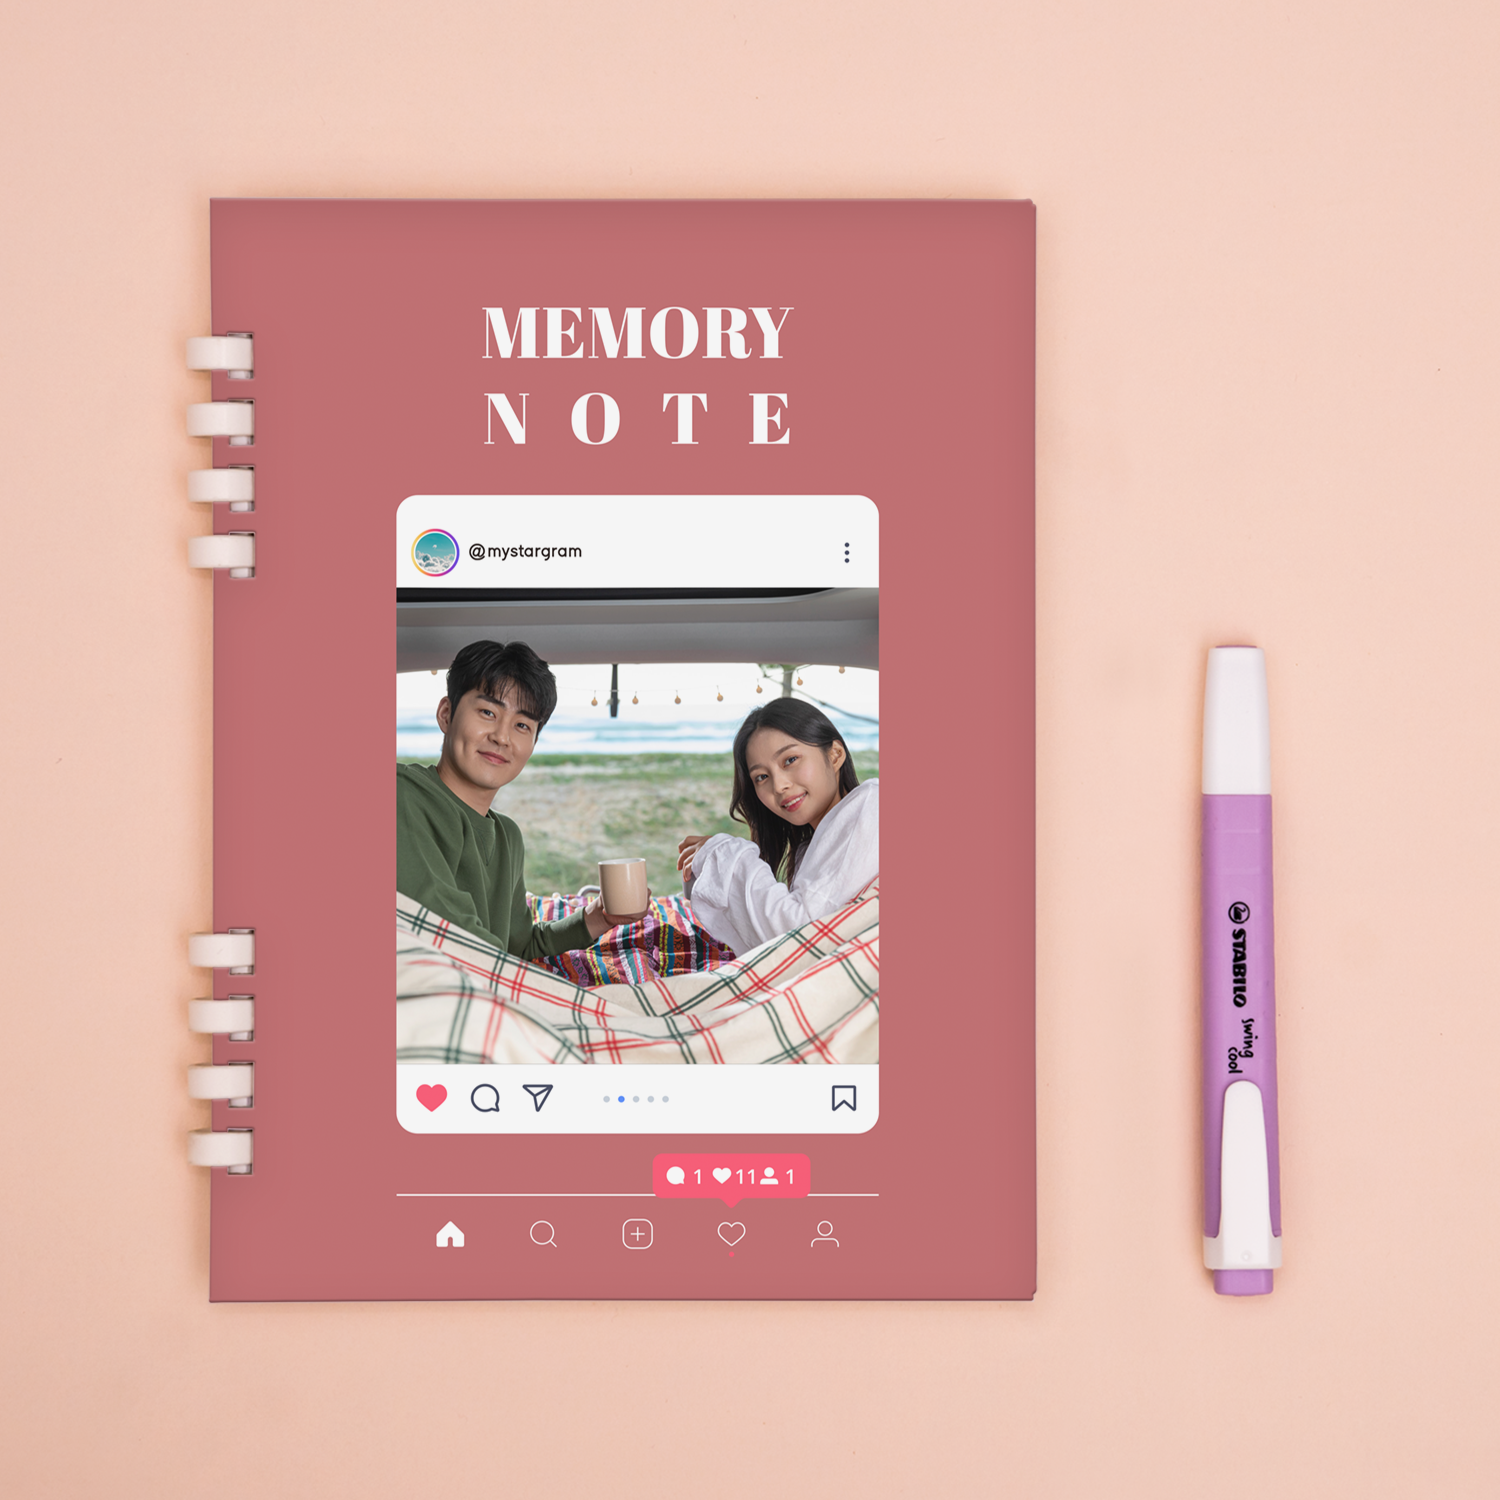 Memory Note